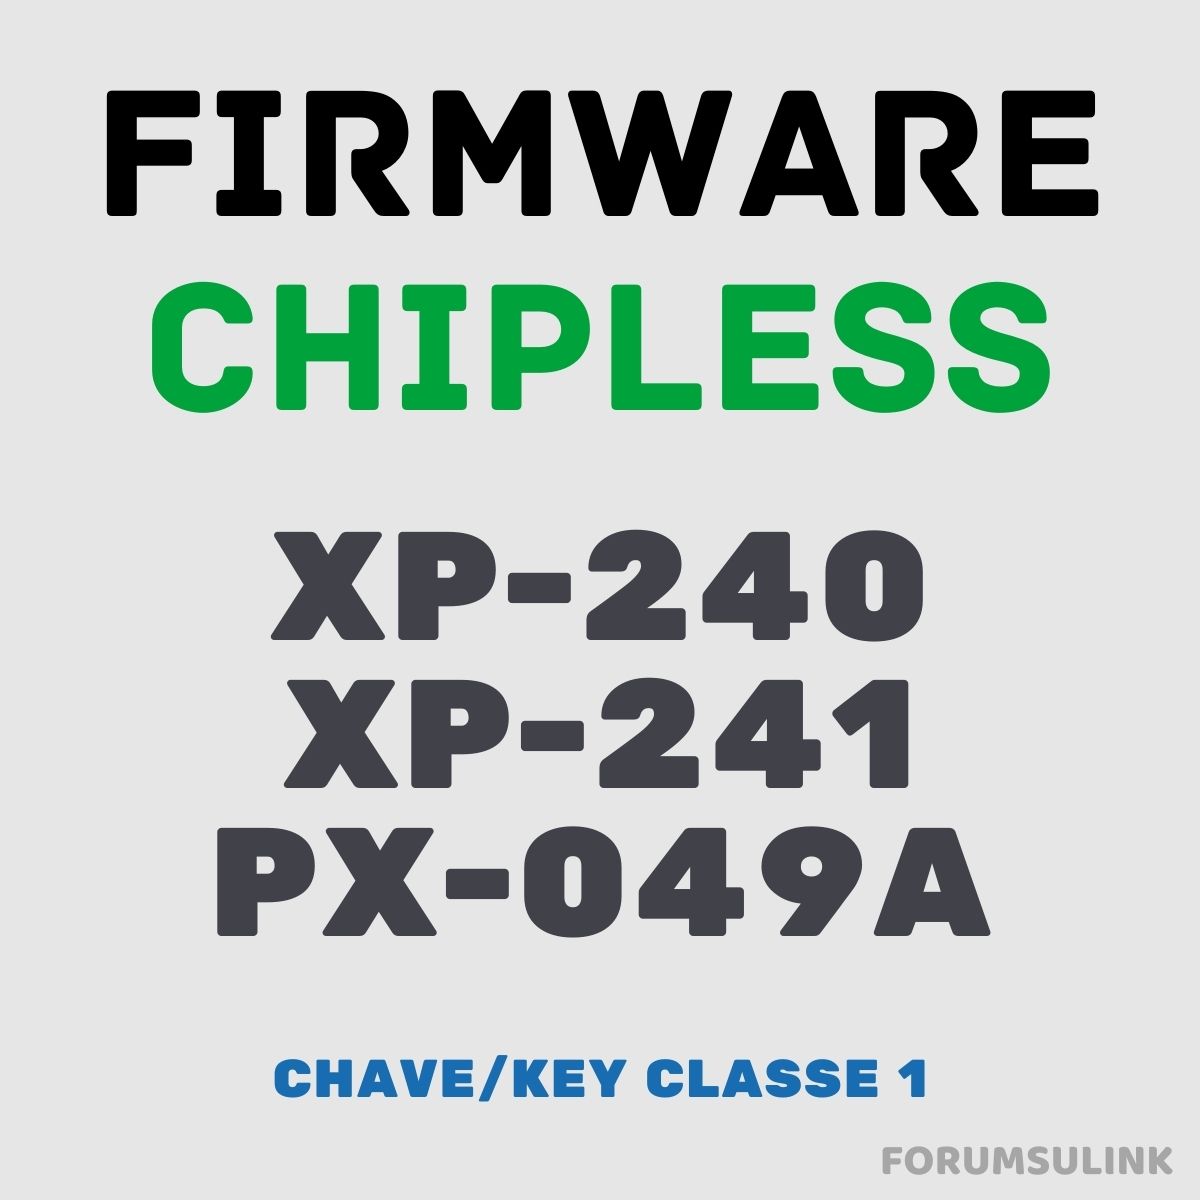 Epson XP-240, XP-241 e PX-049A | Arquivo de Software Firmware ChipLess